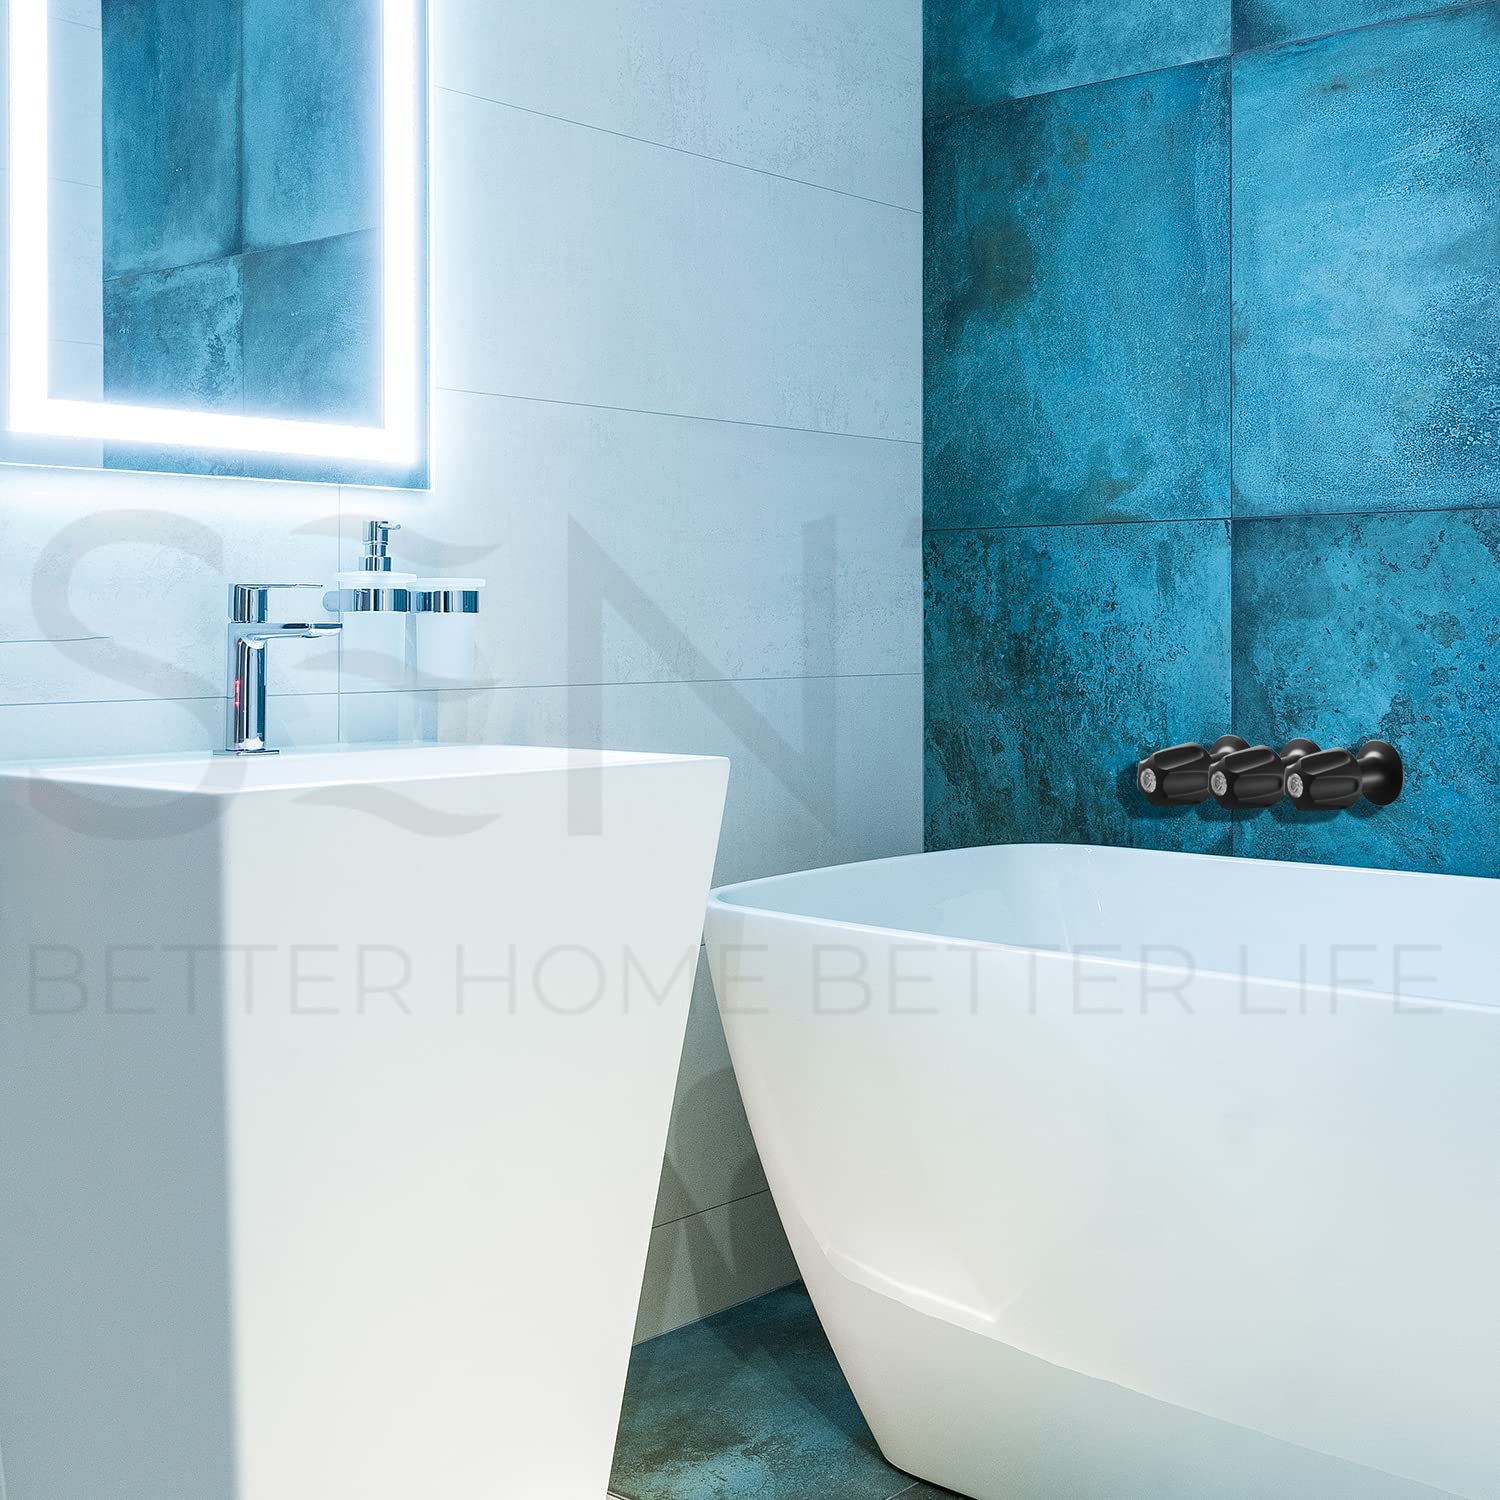 SENTO Bathtub and Shower 3 Handle Tub Trim Set For Price Pfister Faucets Bathtub Shower, Easy Installation, Heavy Duty Metal, Matte Black